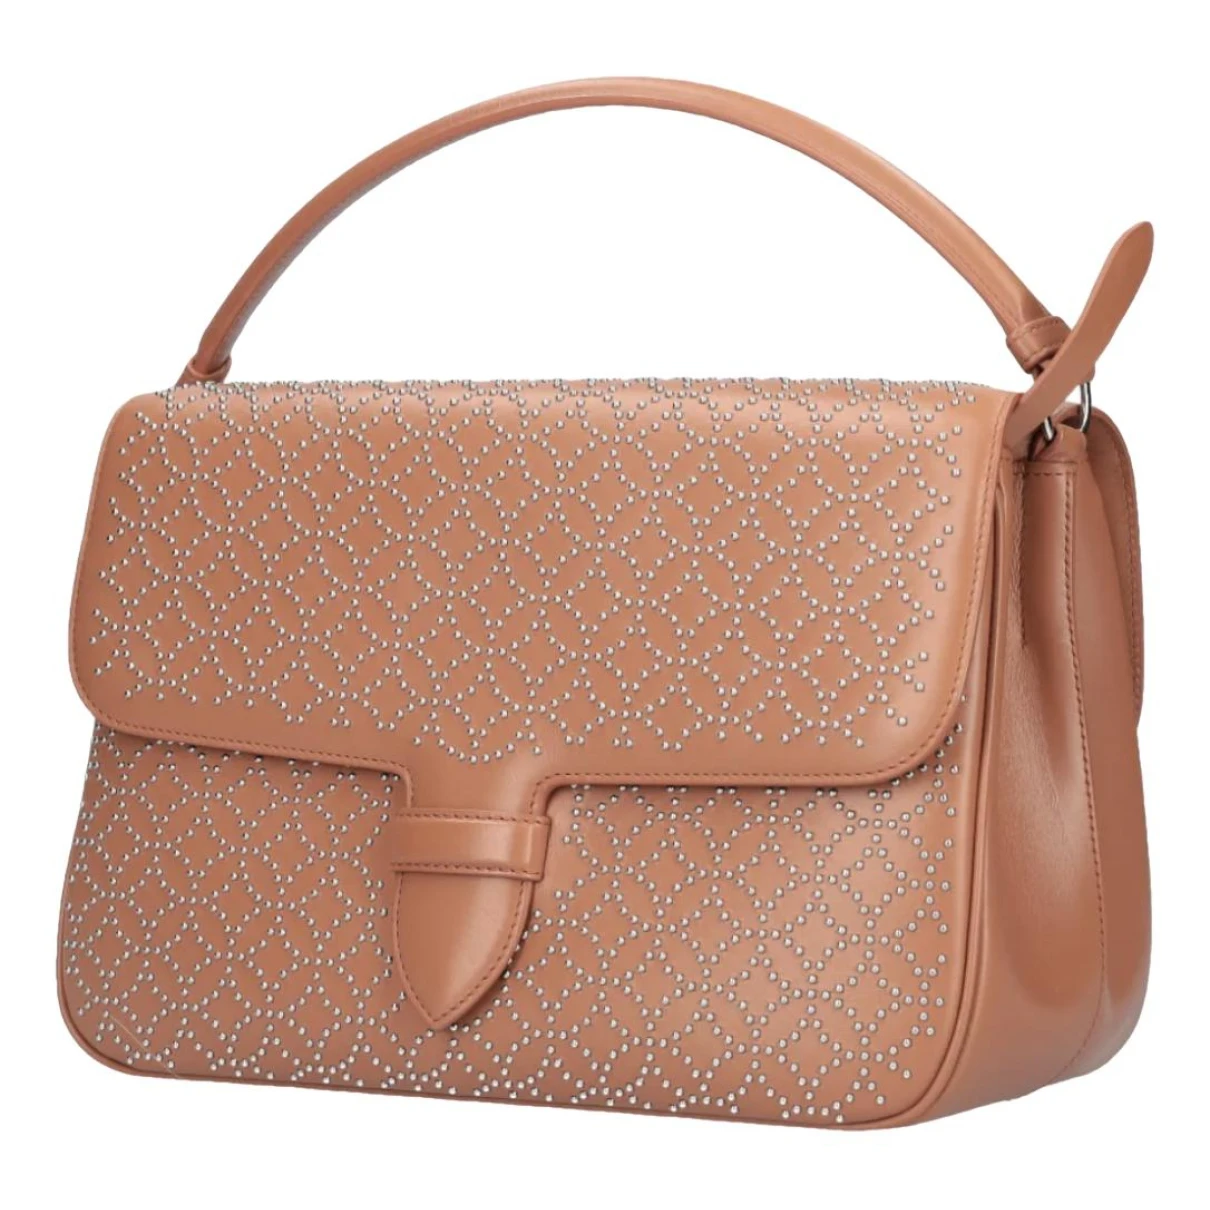 Pre-owned Alaïa Leather Handbag In Brown